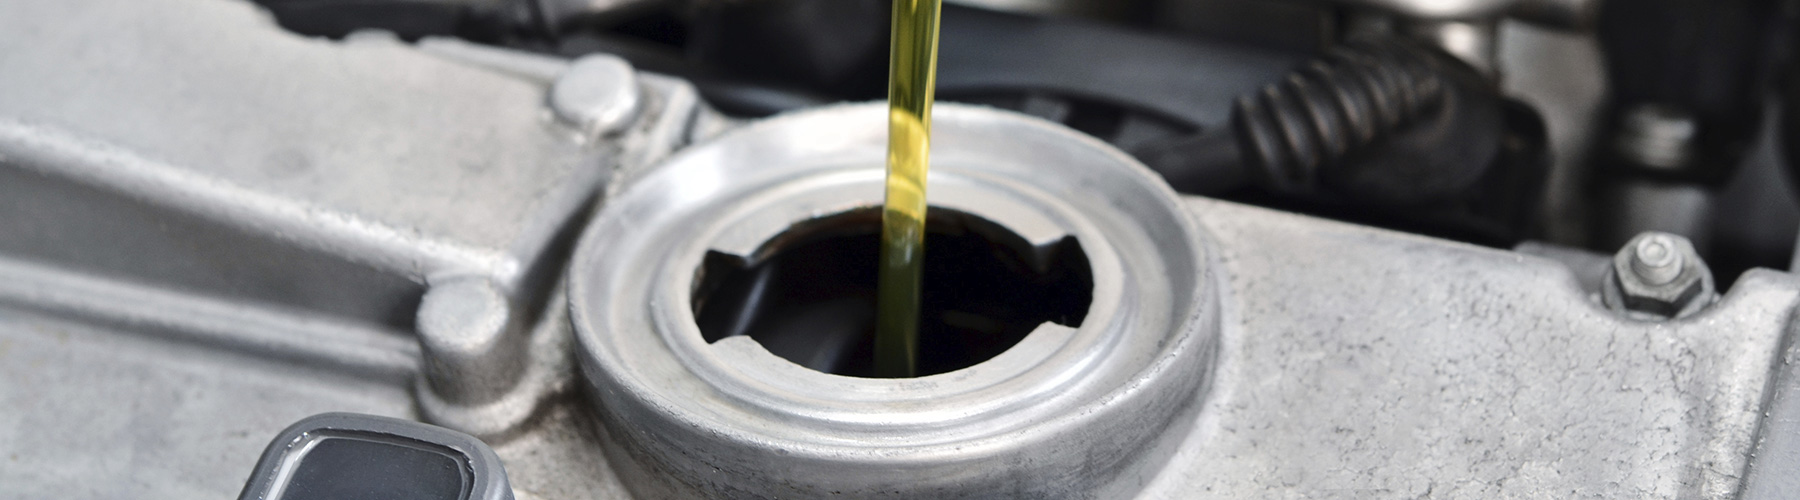 Automobile oil